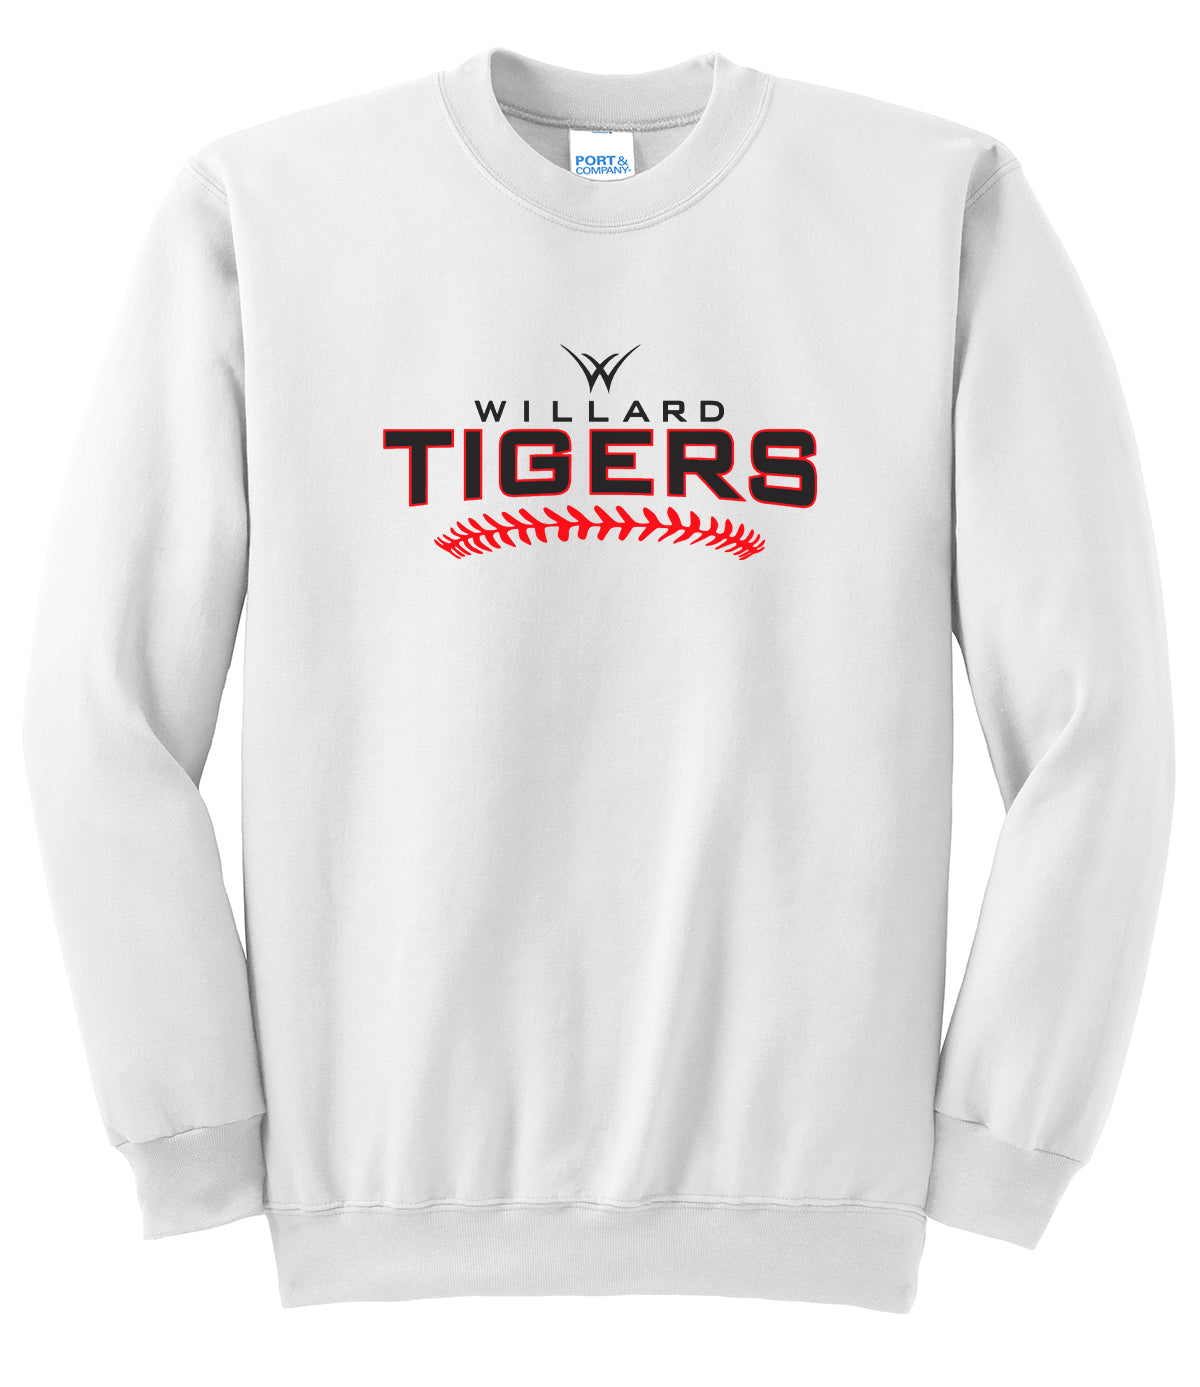 Willard Tigers Baseball Crew Neck Sweater